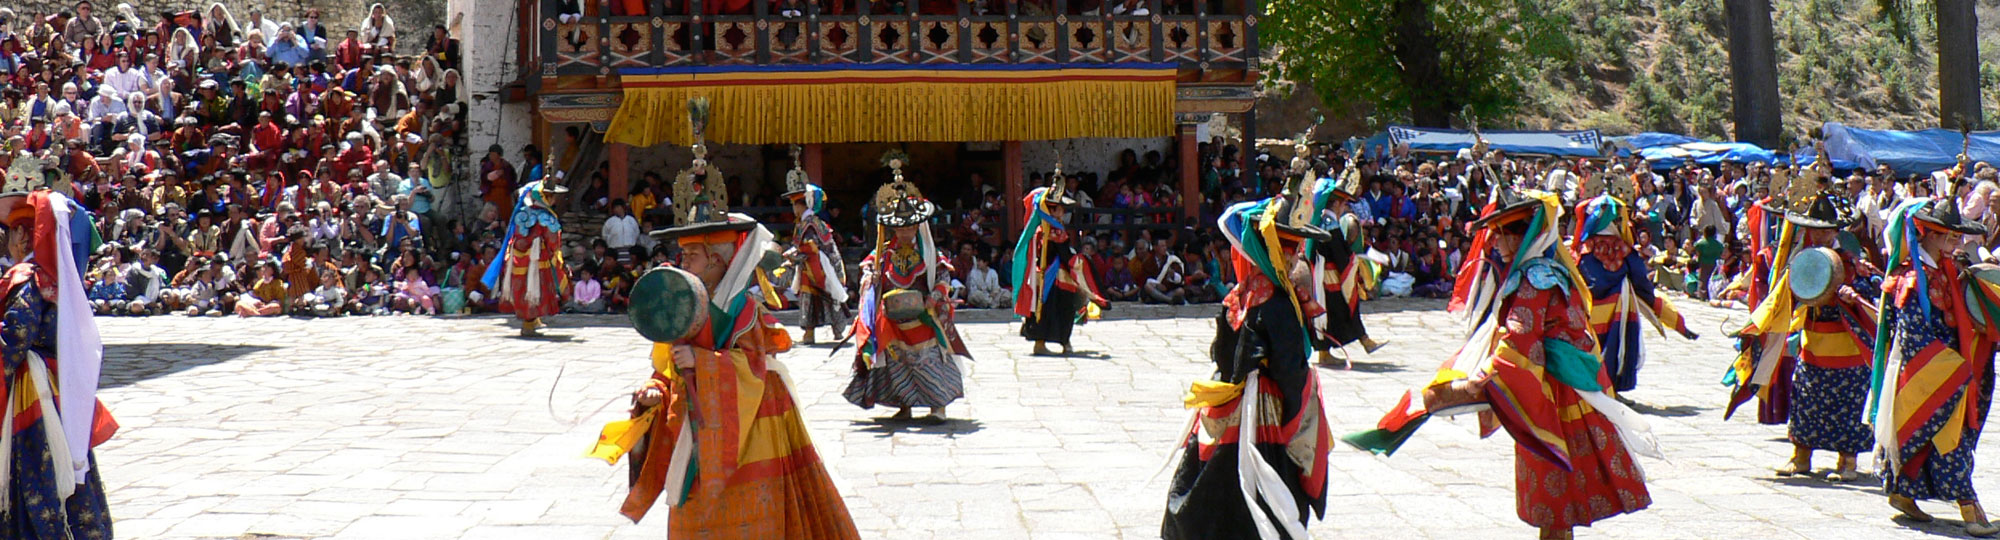 bhutan festival @t2bhutan.com